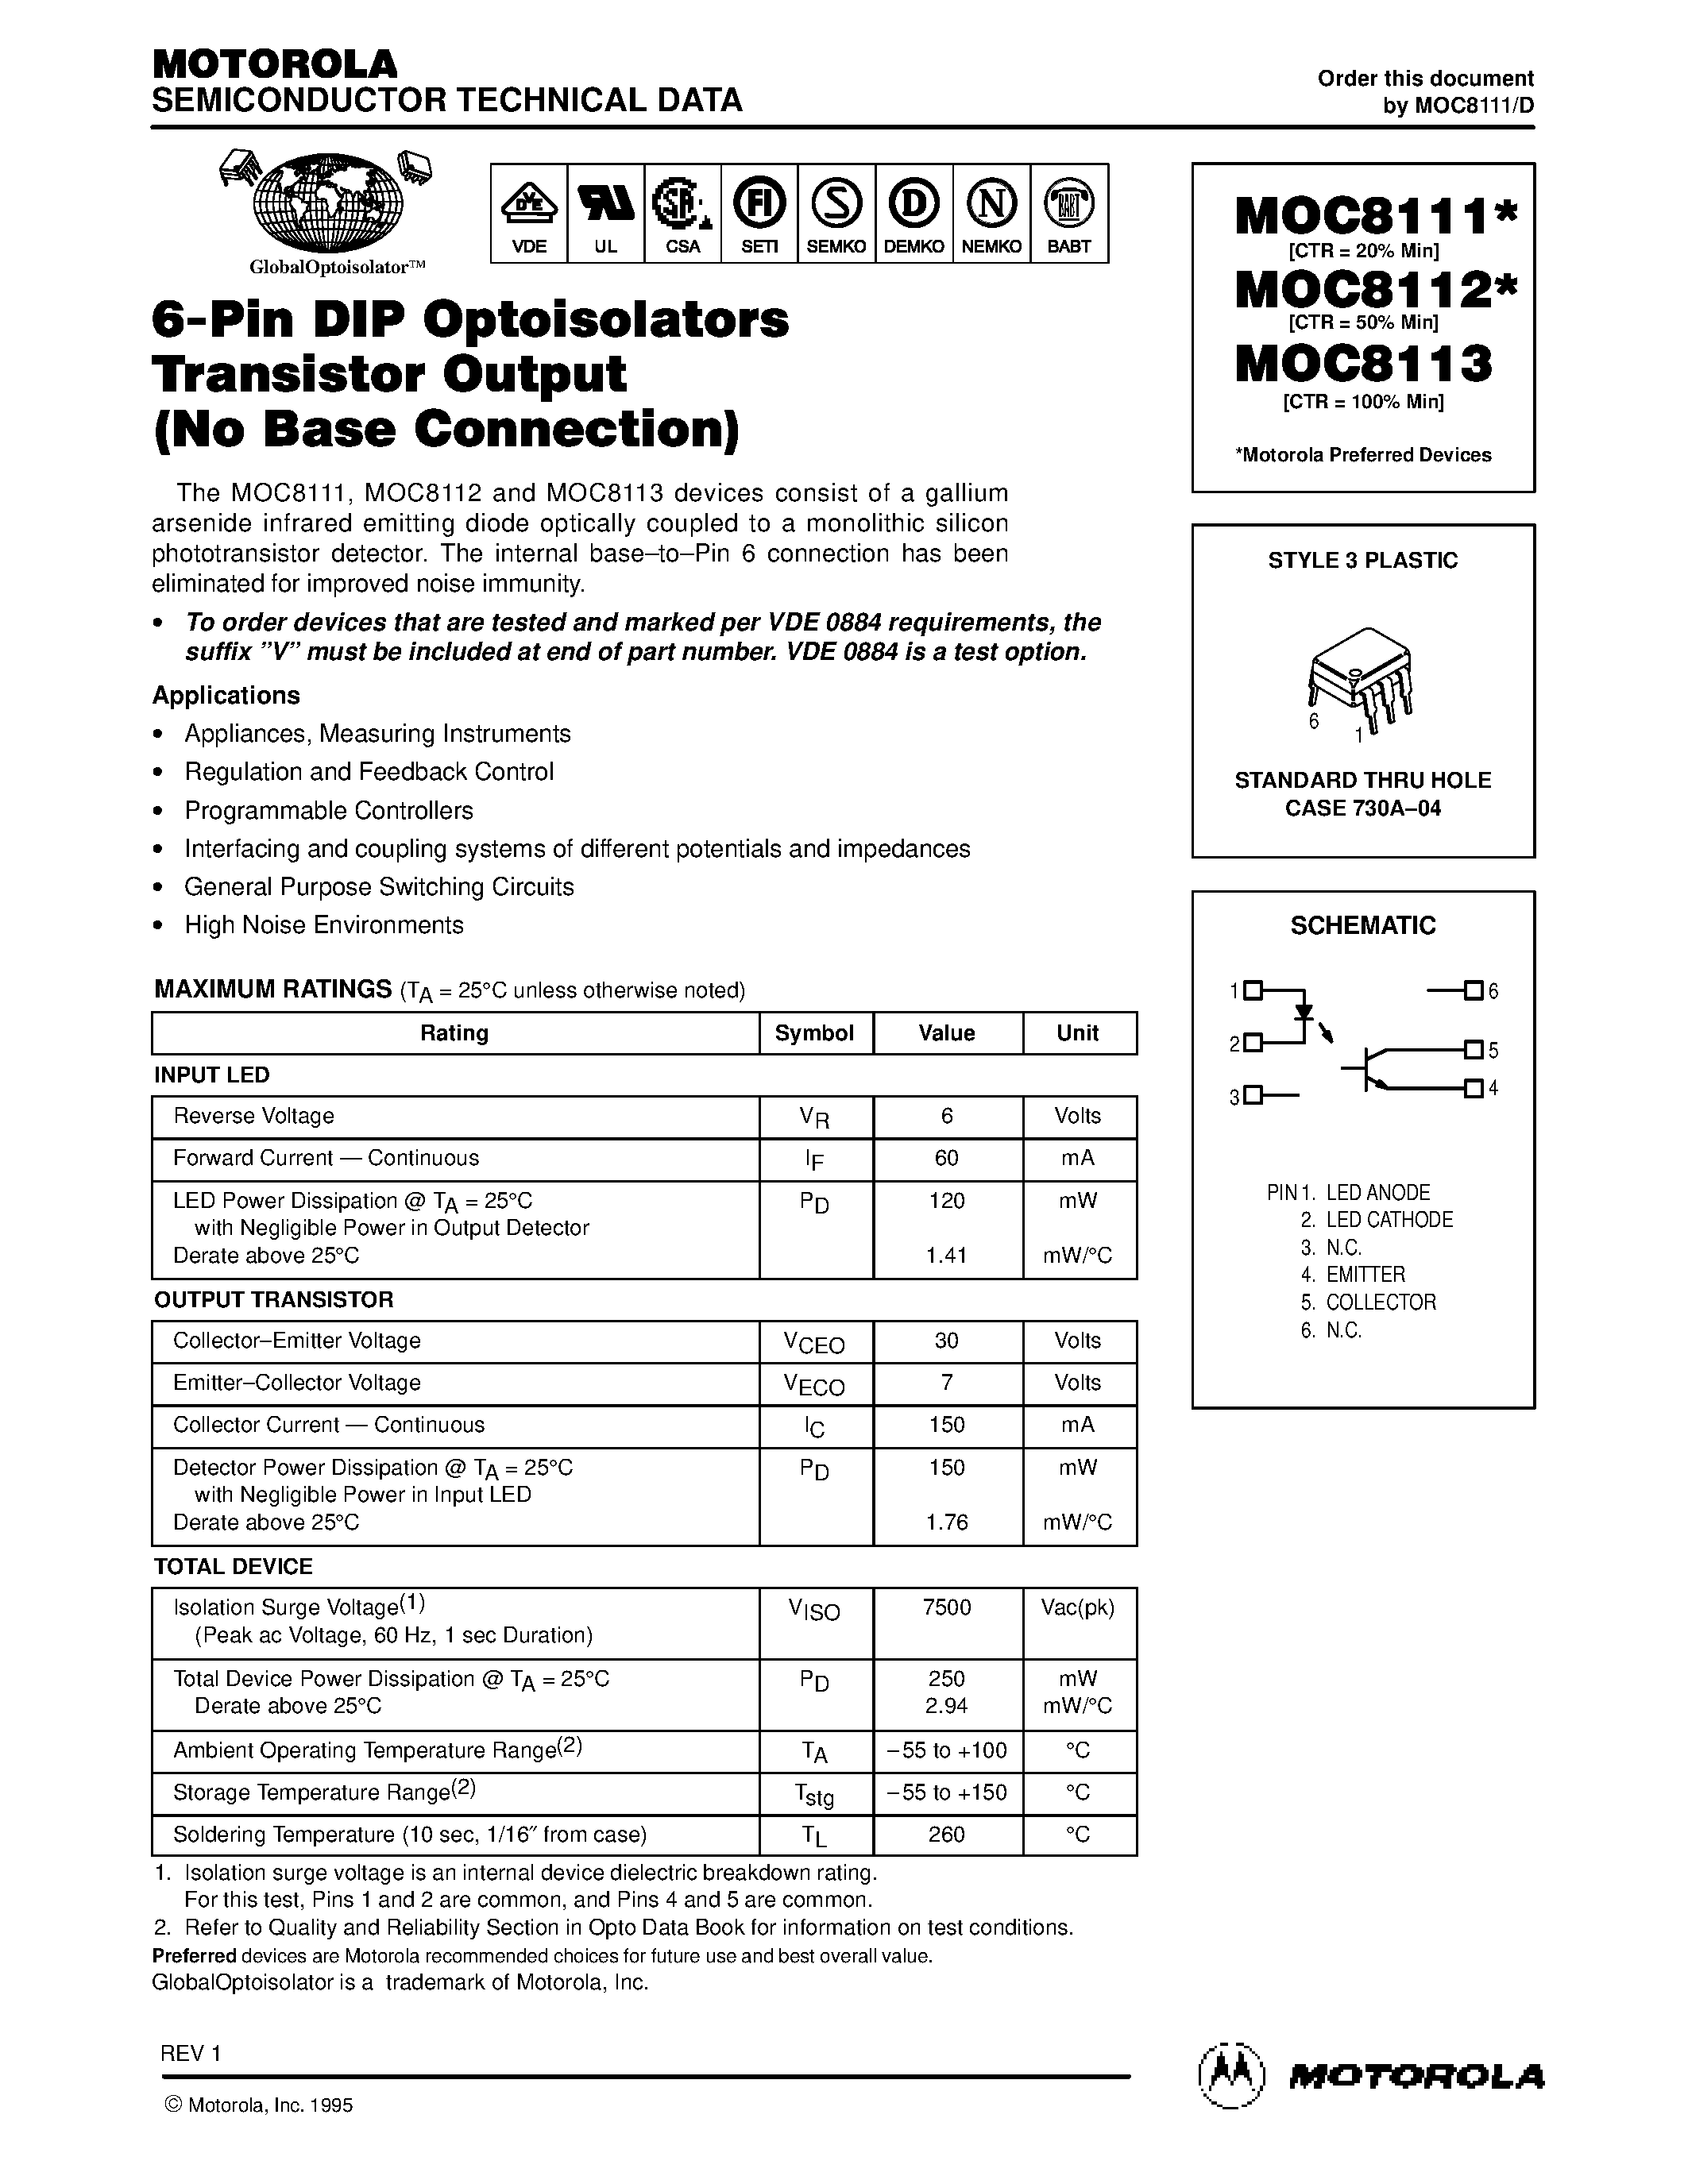 Datasheet MOC8111 - (MOC8111 / MOC8112 / MOC8113) 6-Pin DIP Optoisolators Transistor Output(No Base Connection) page 1